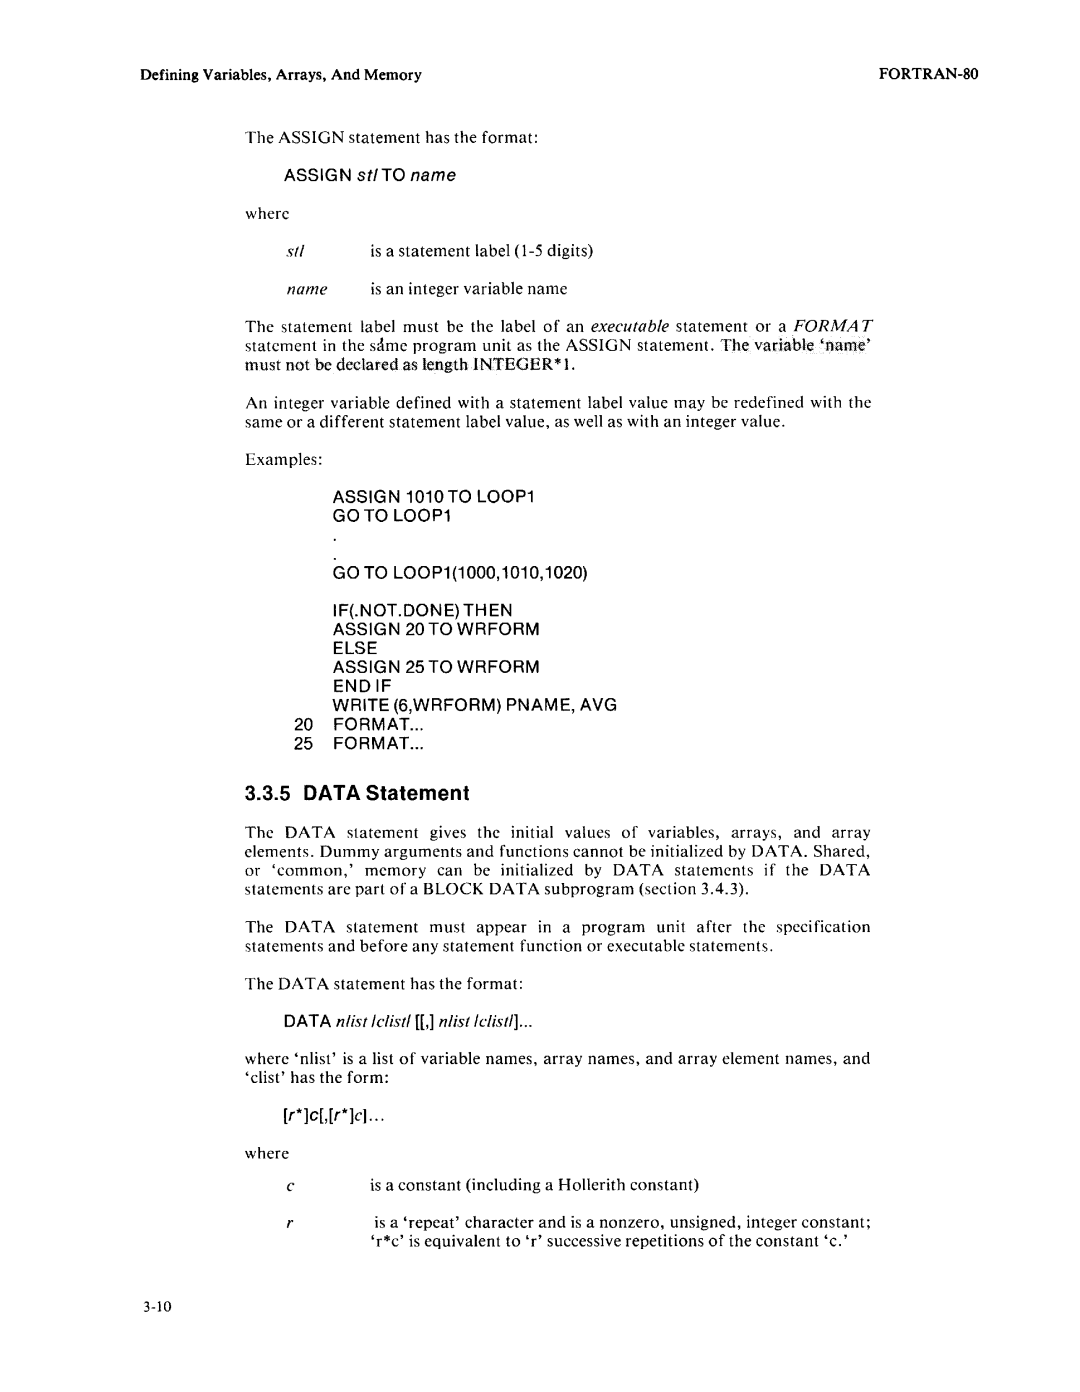 Intel fortran-80 manual 3.3.5DATA Statement, ASSIGN stlTO name, r*c,r*c 